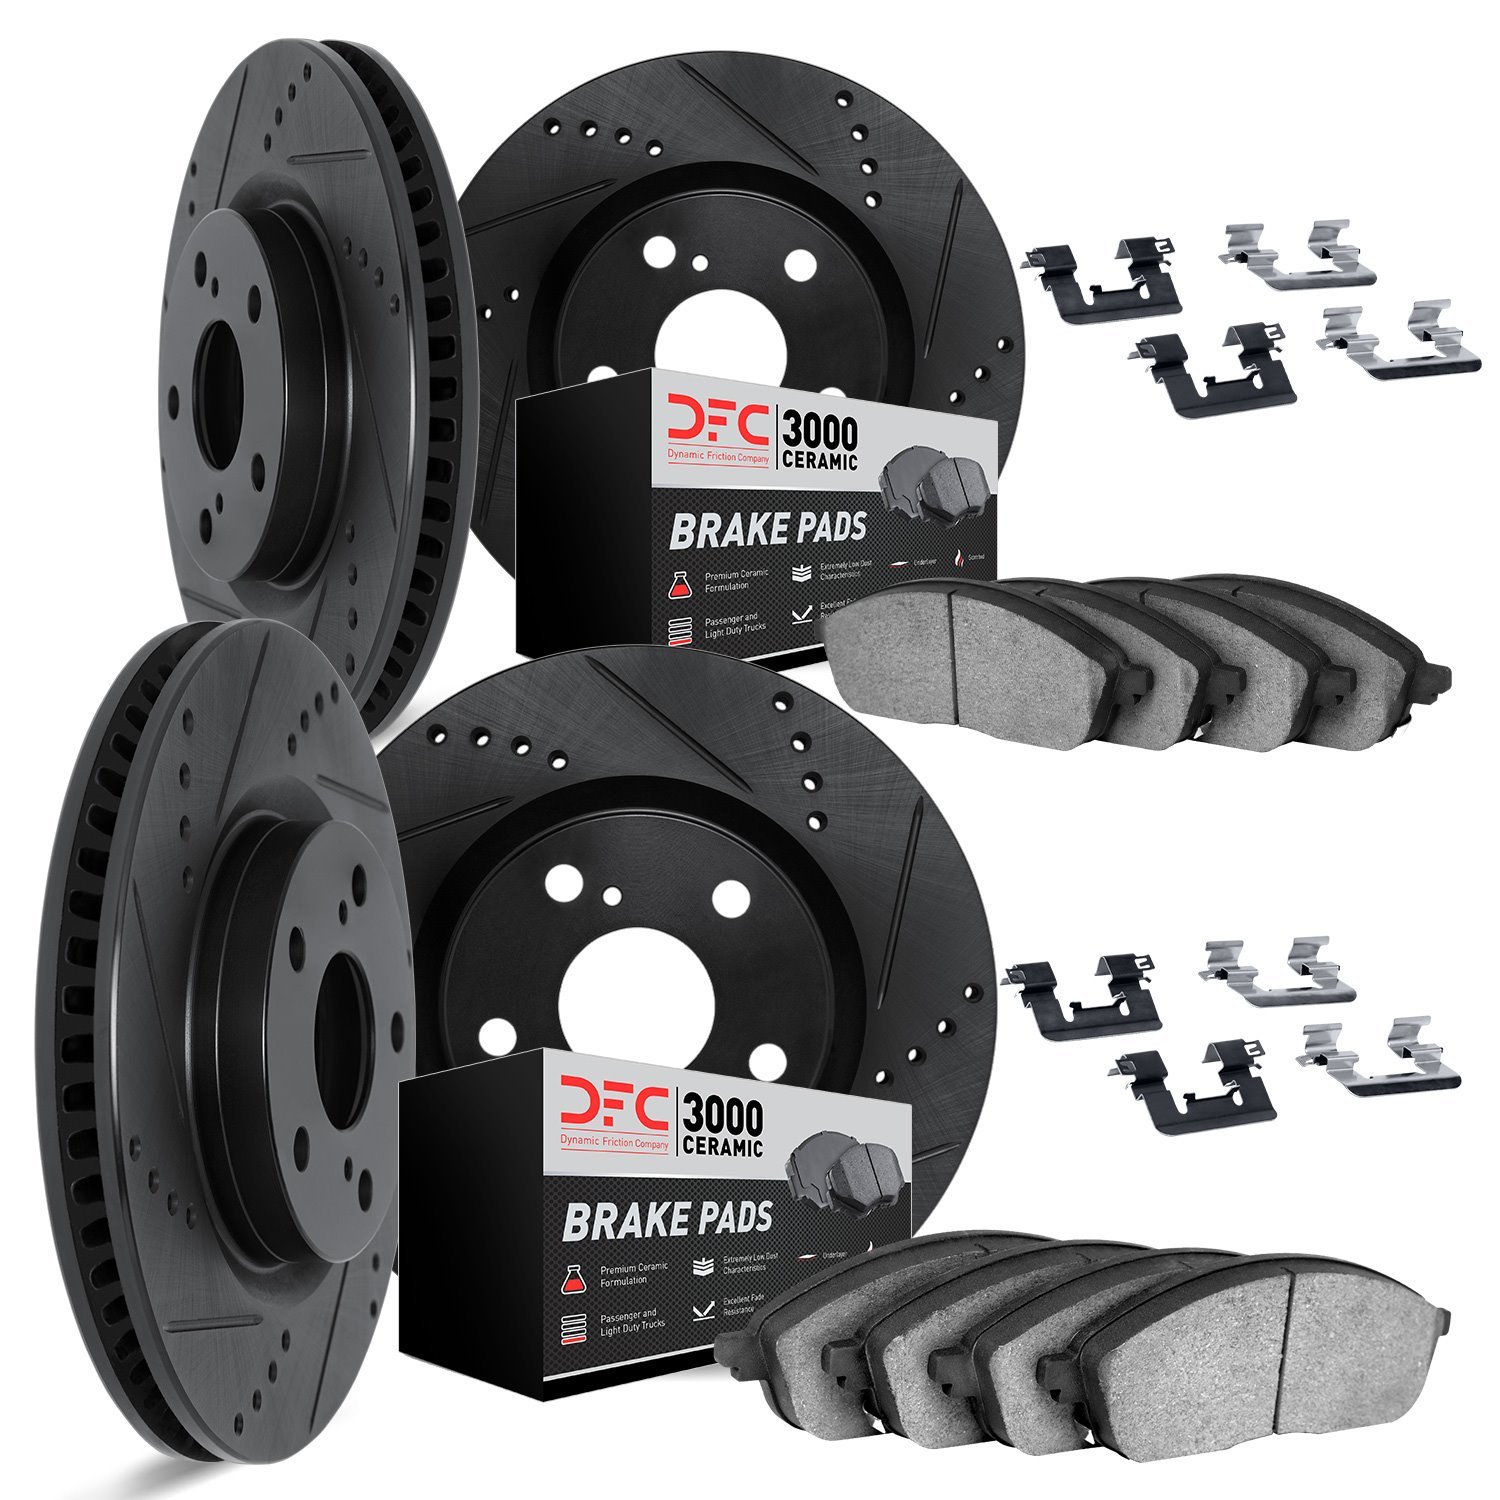 8314-67078 Drilled/Slotted Brake Rotors with 3000-Series Ceramic Brake Pads Kit & Hardware [Black], Fits Select Infiniti/Nissan,